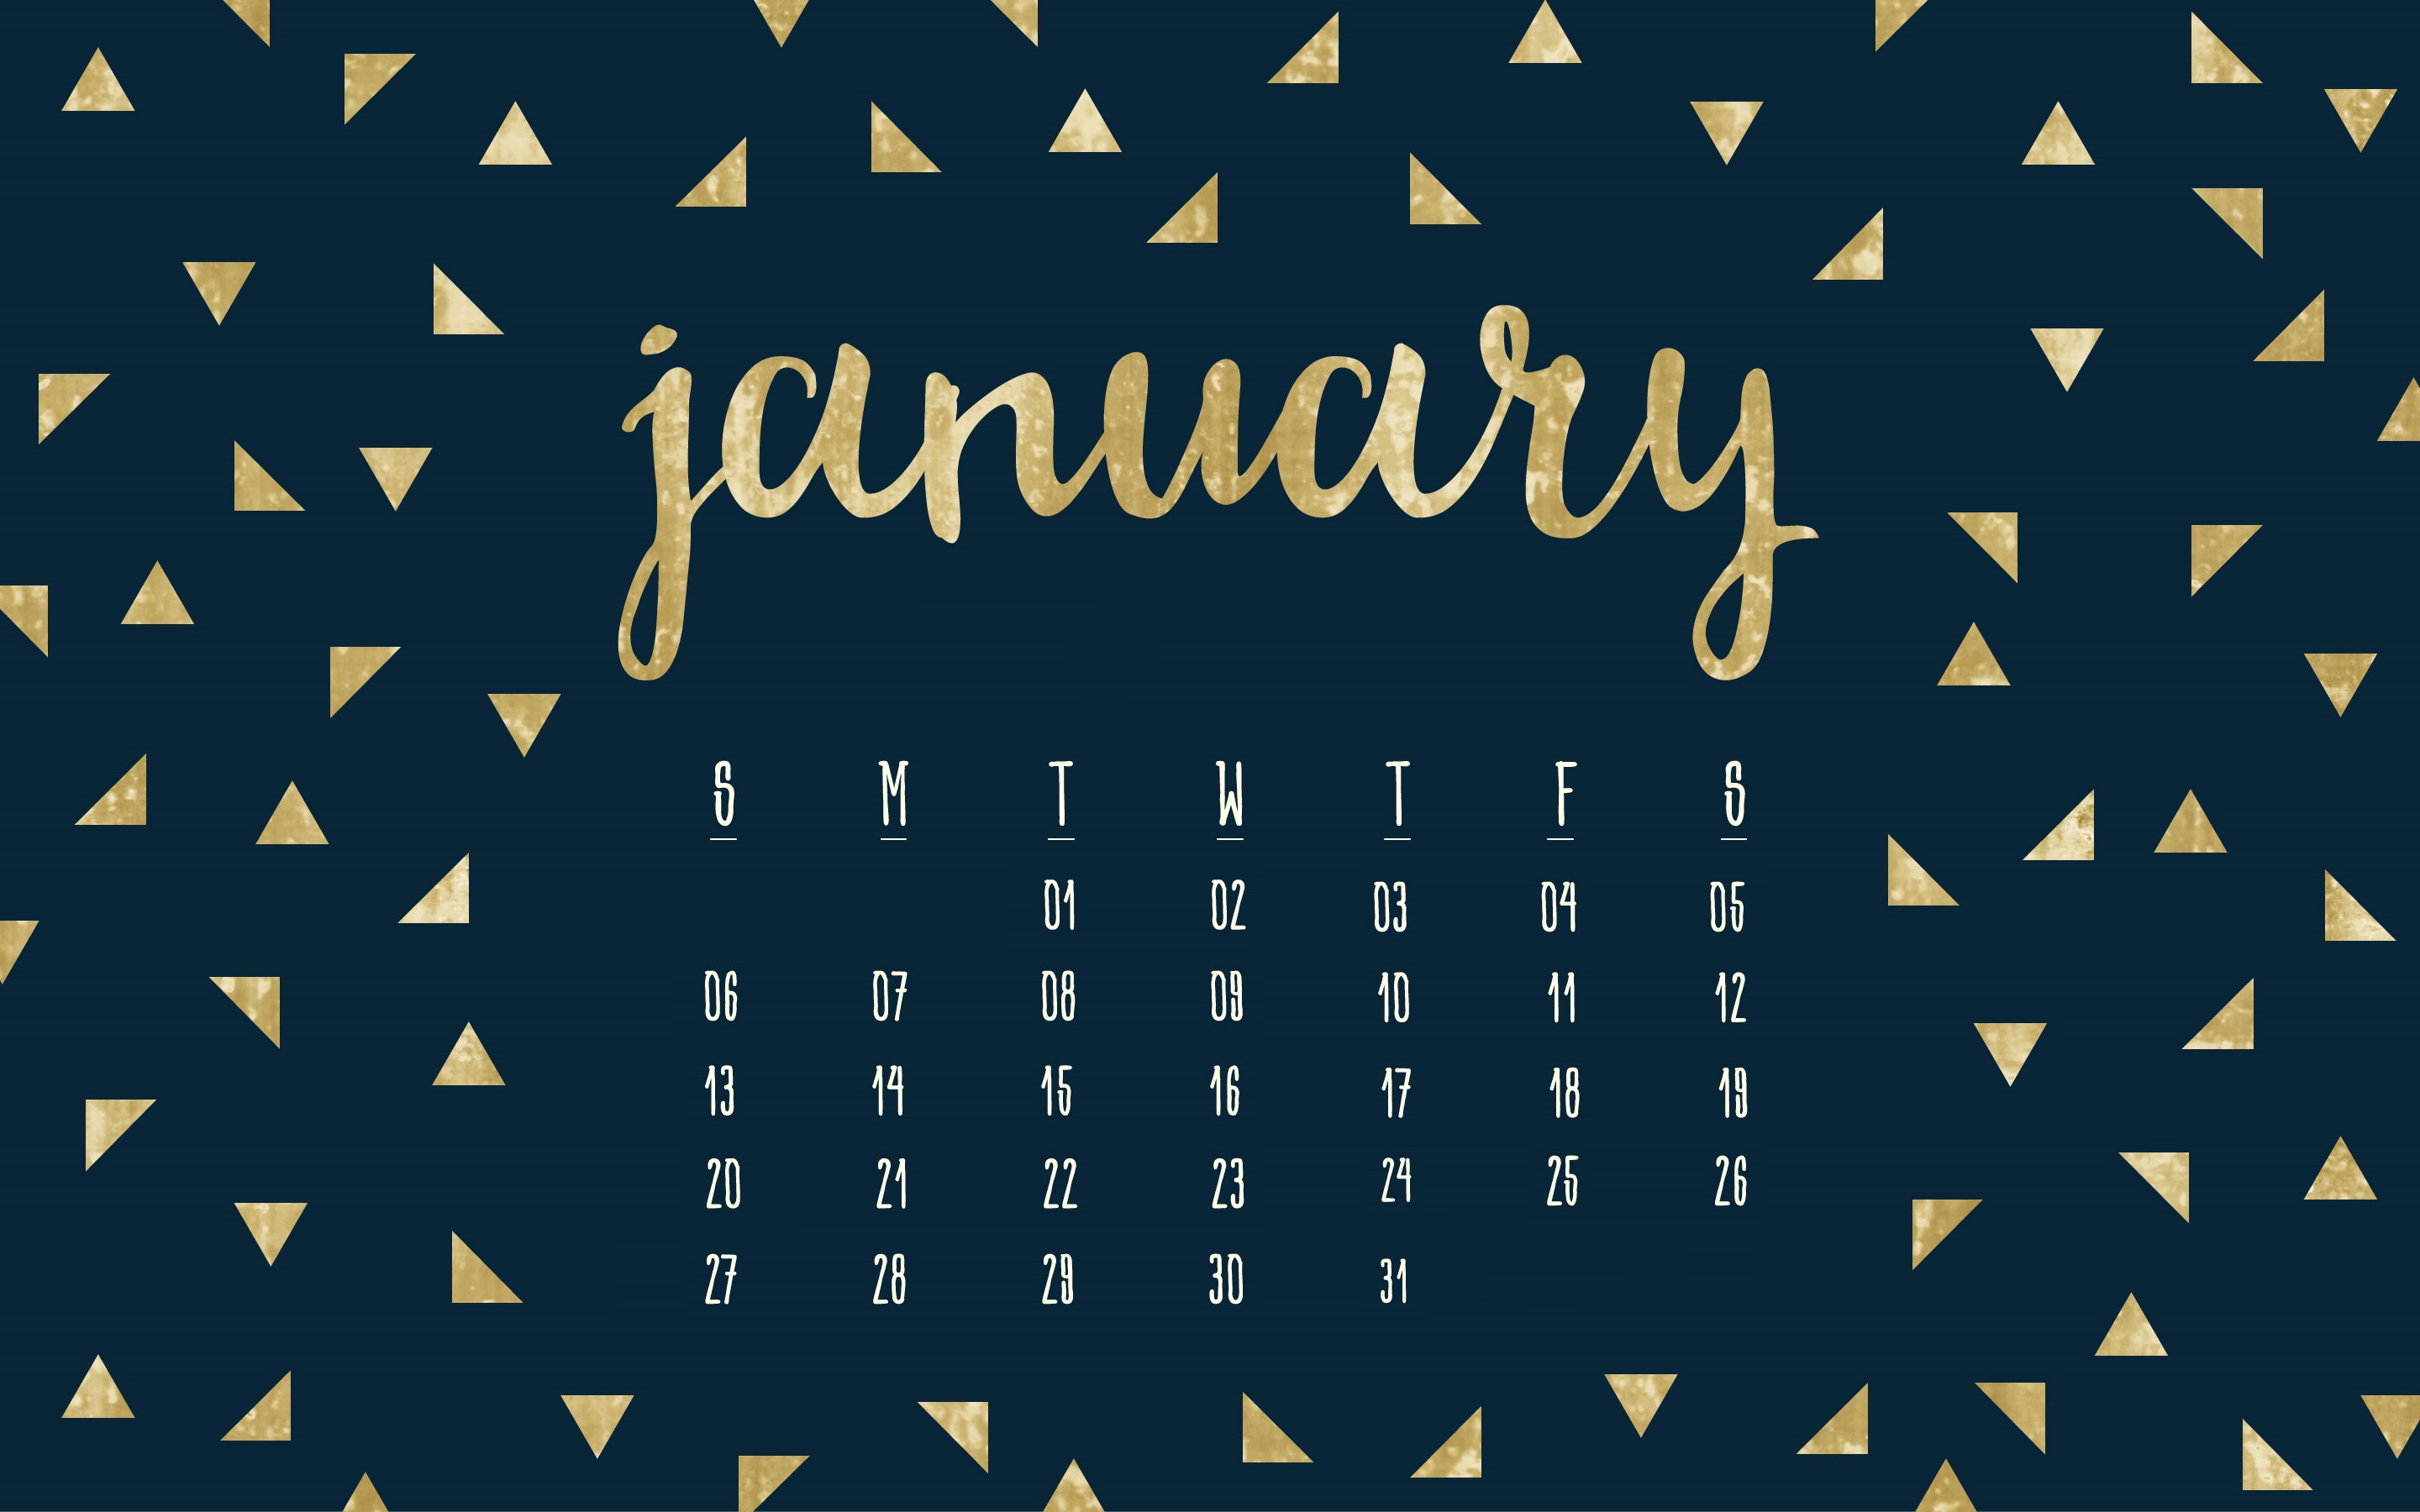 January 2019 Calendar Wallpapers